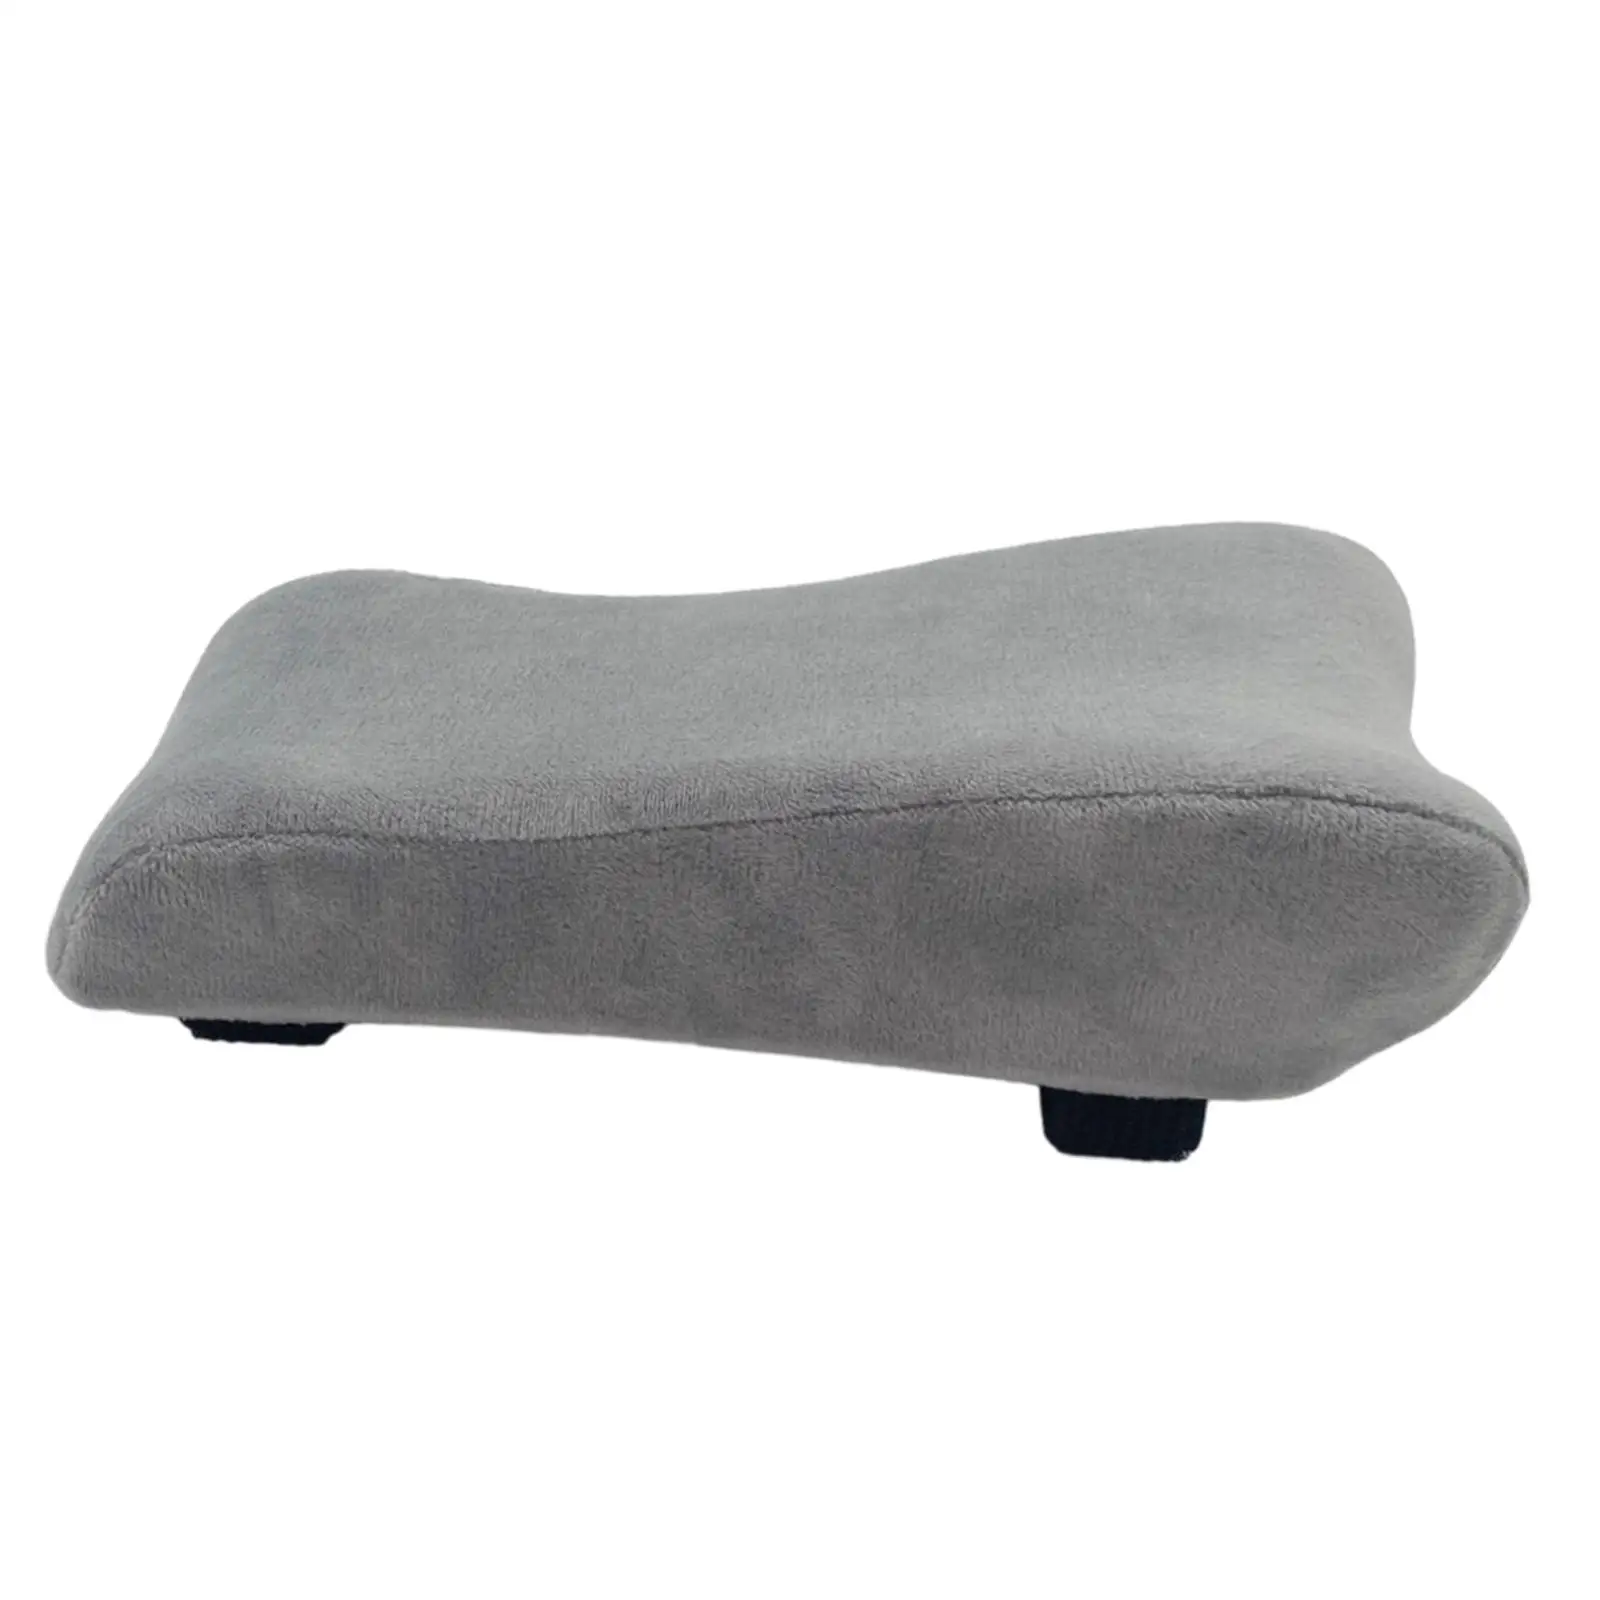 Armrest Pads Office Support Cushion Soft Universal Wrist Rest Armrest Pillow